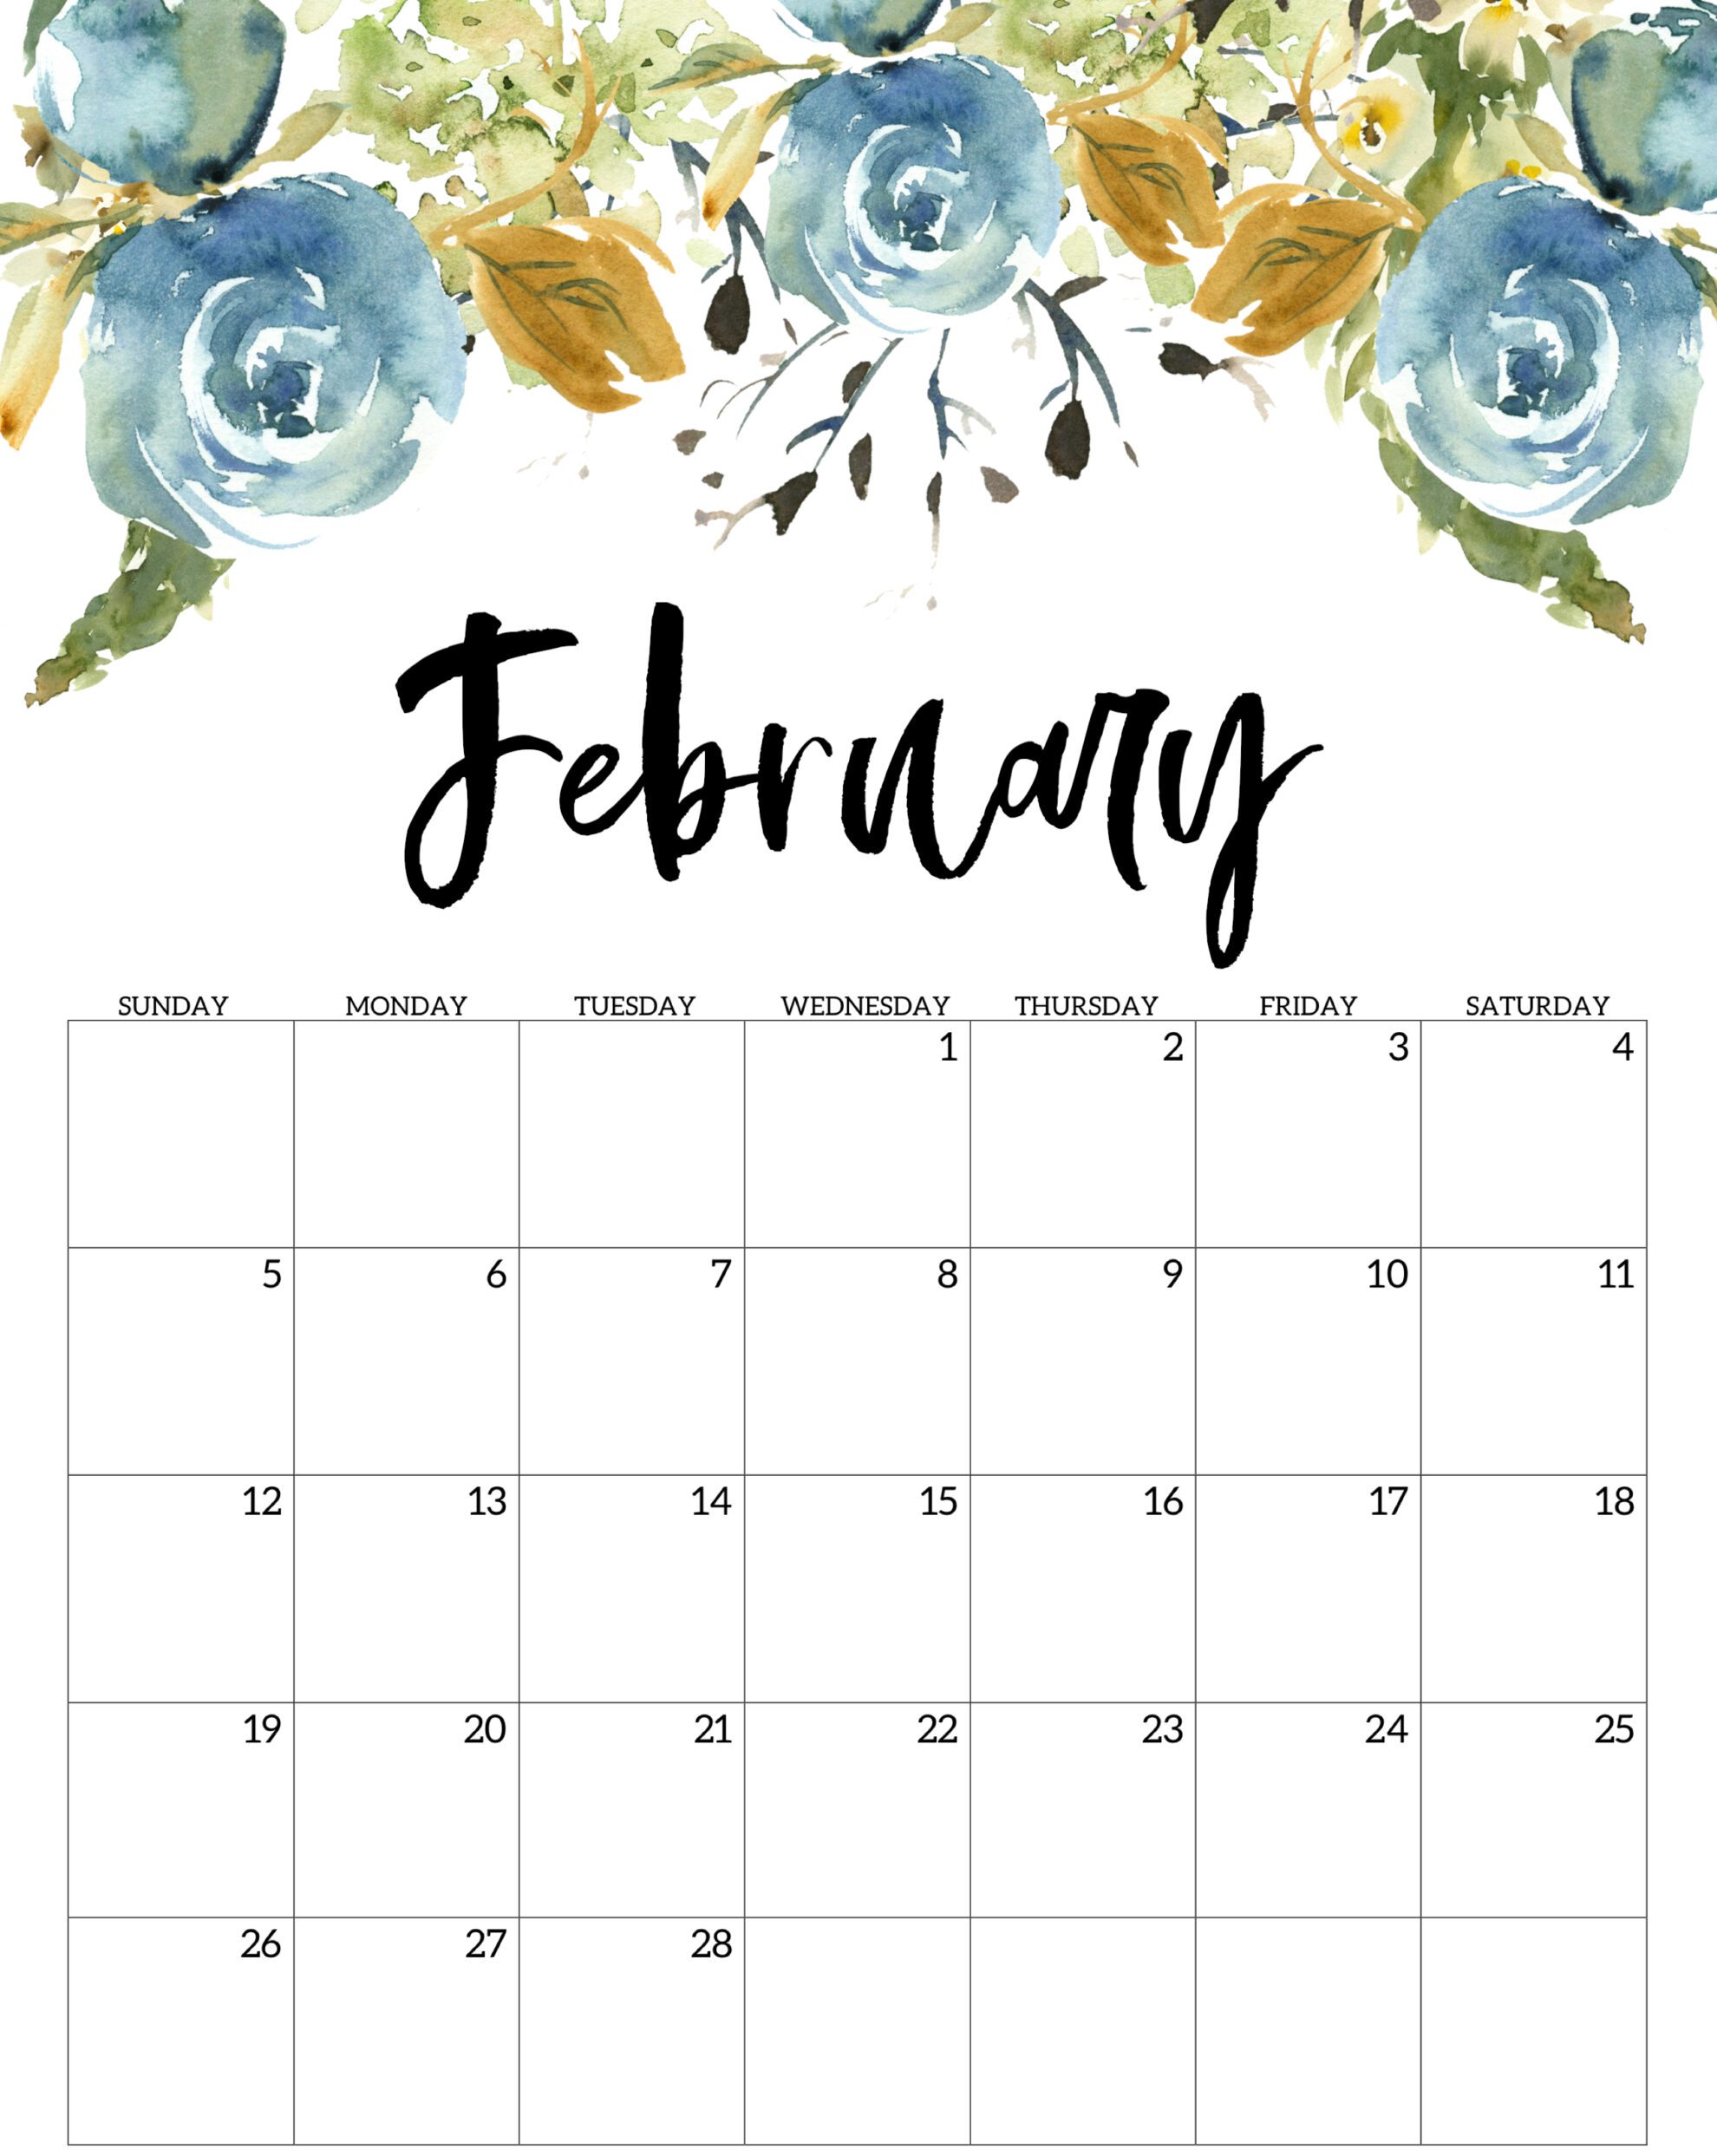 February 2023 calendar floral new